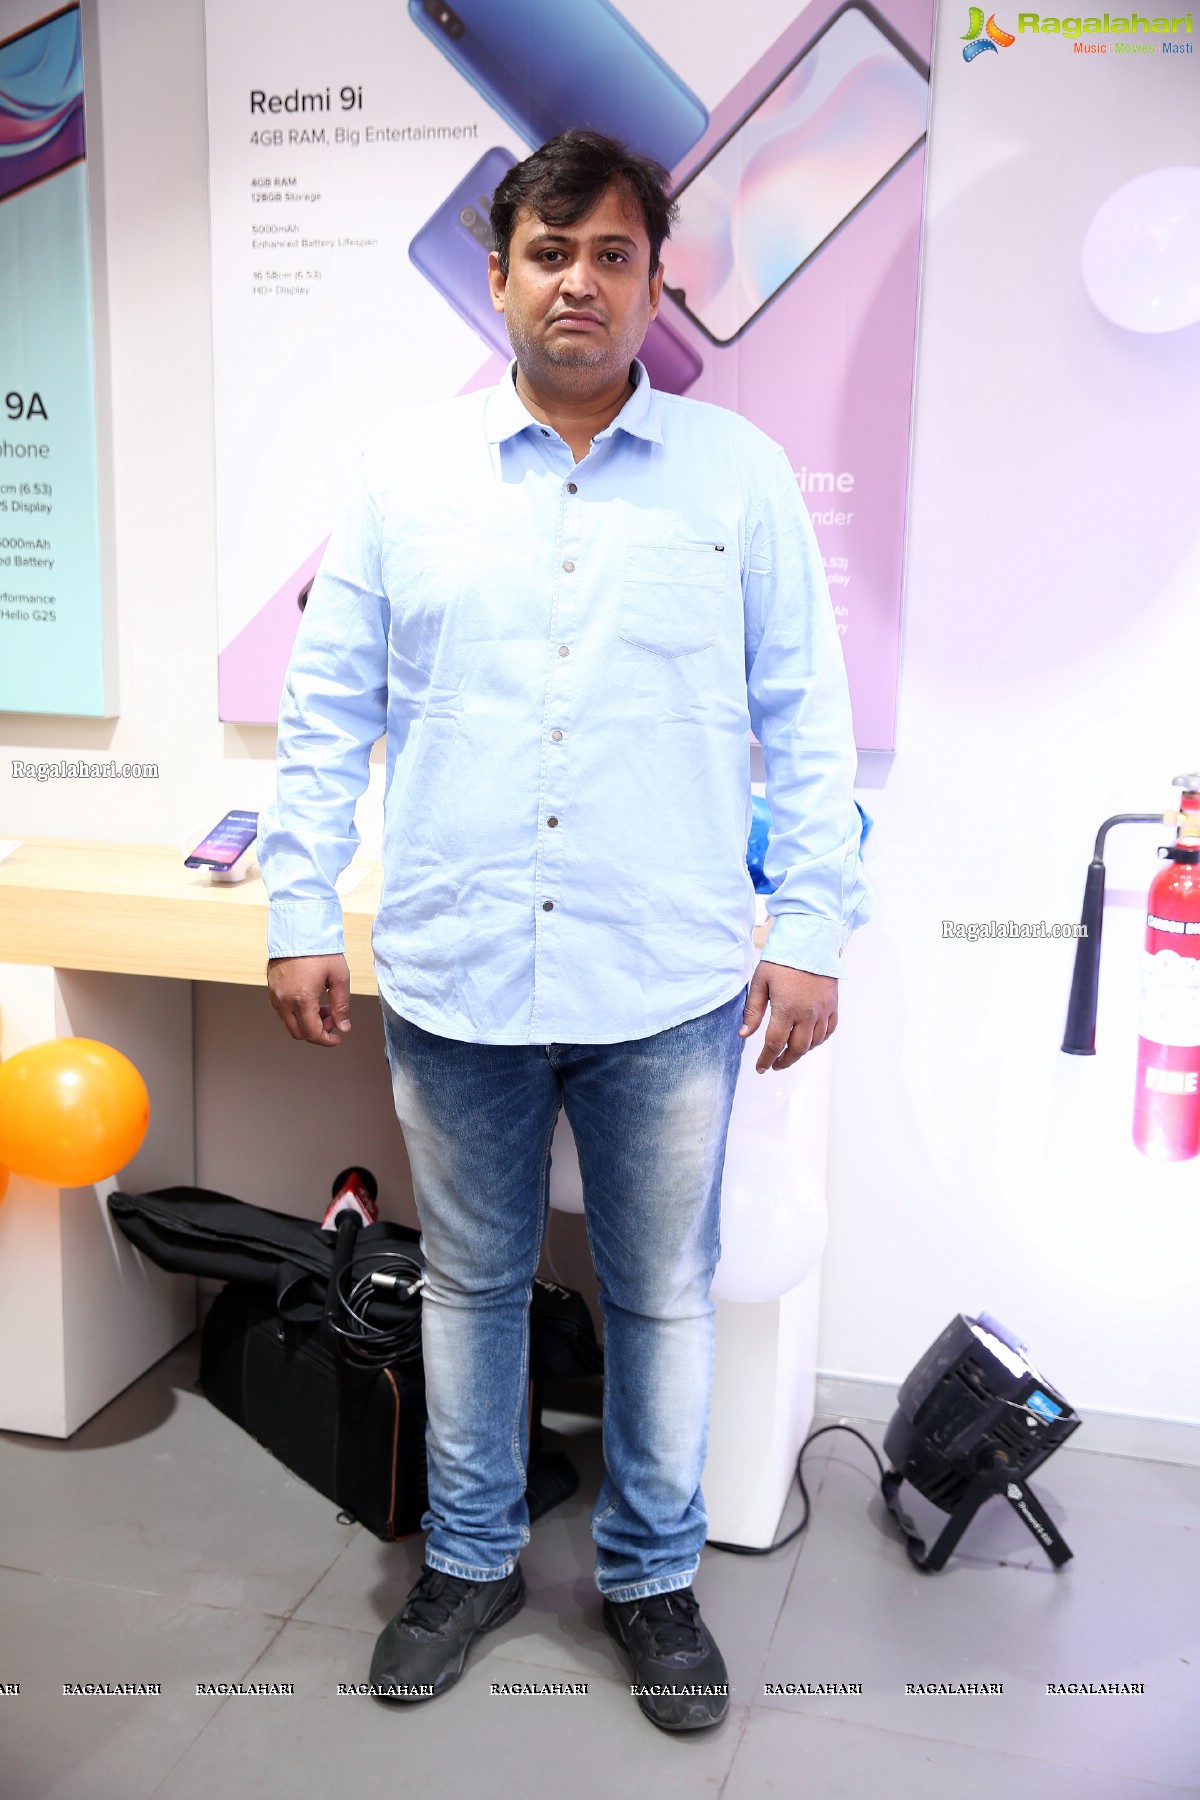 Mi-Stores Unveils 6th Mi Studio of Hyderabad at Ameerpet